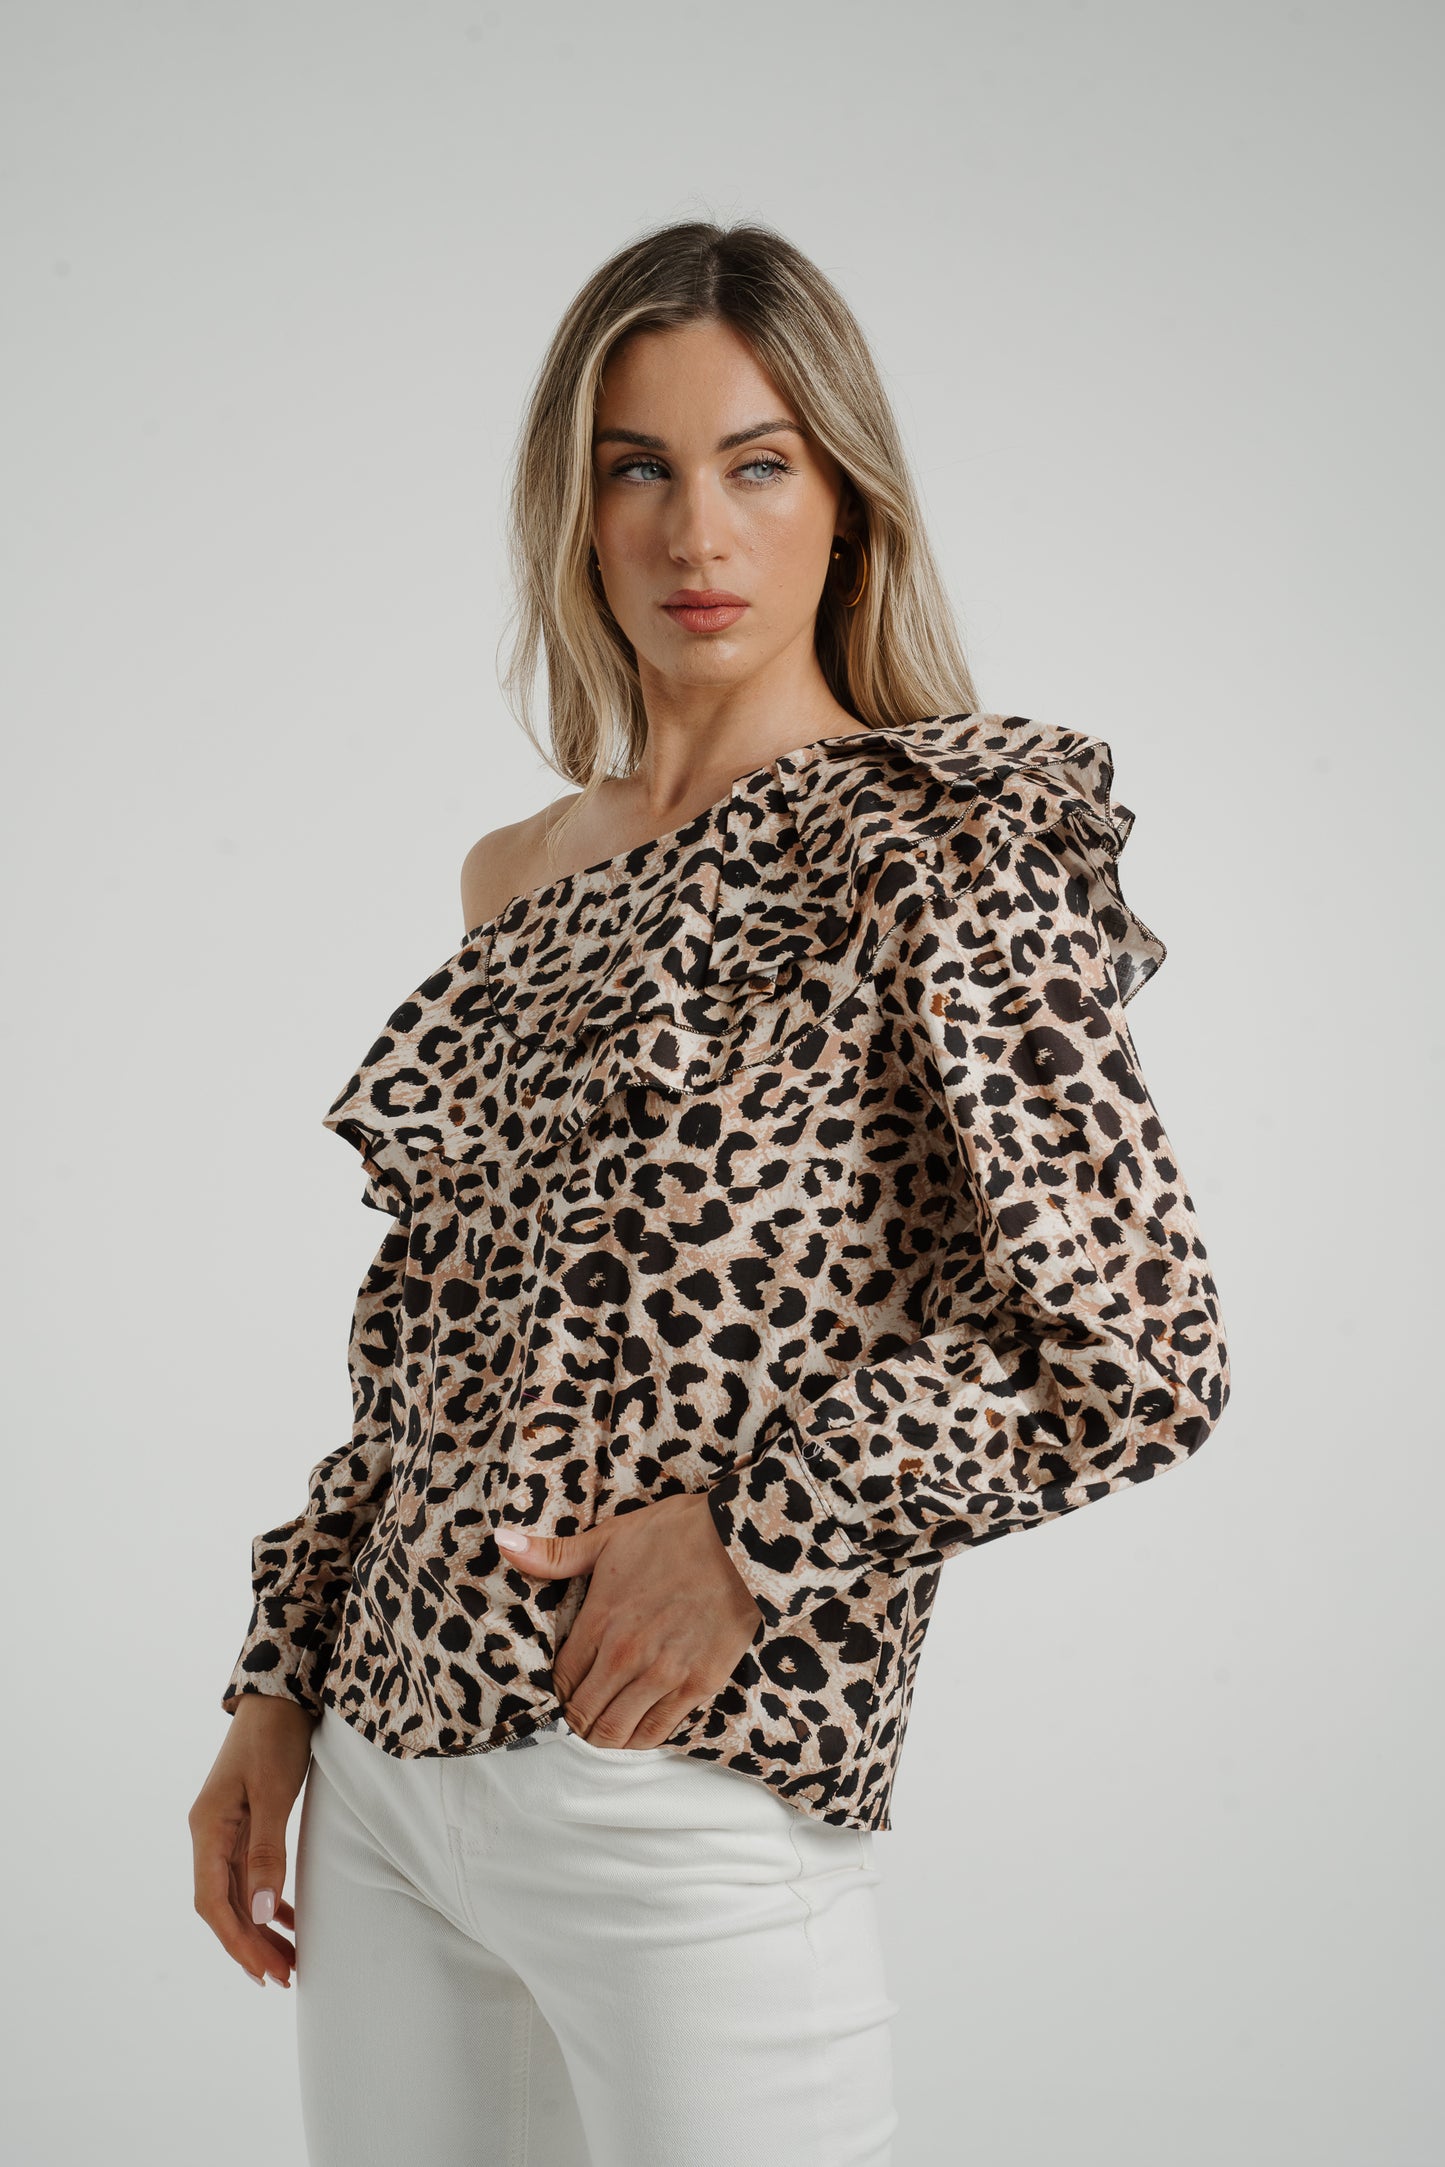 Leona One Shoulder Top In Leopard Print